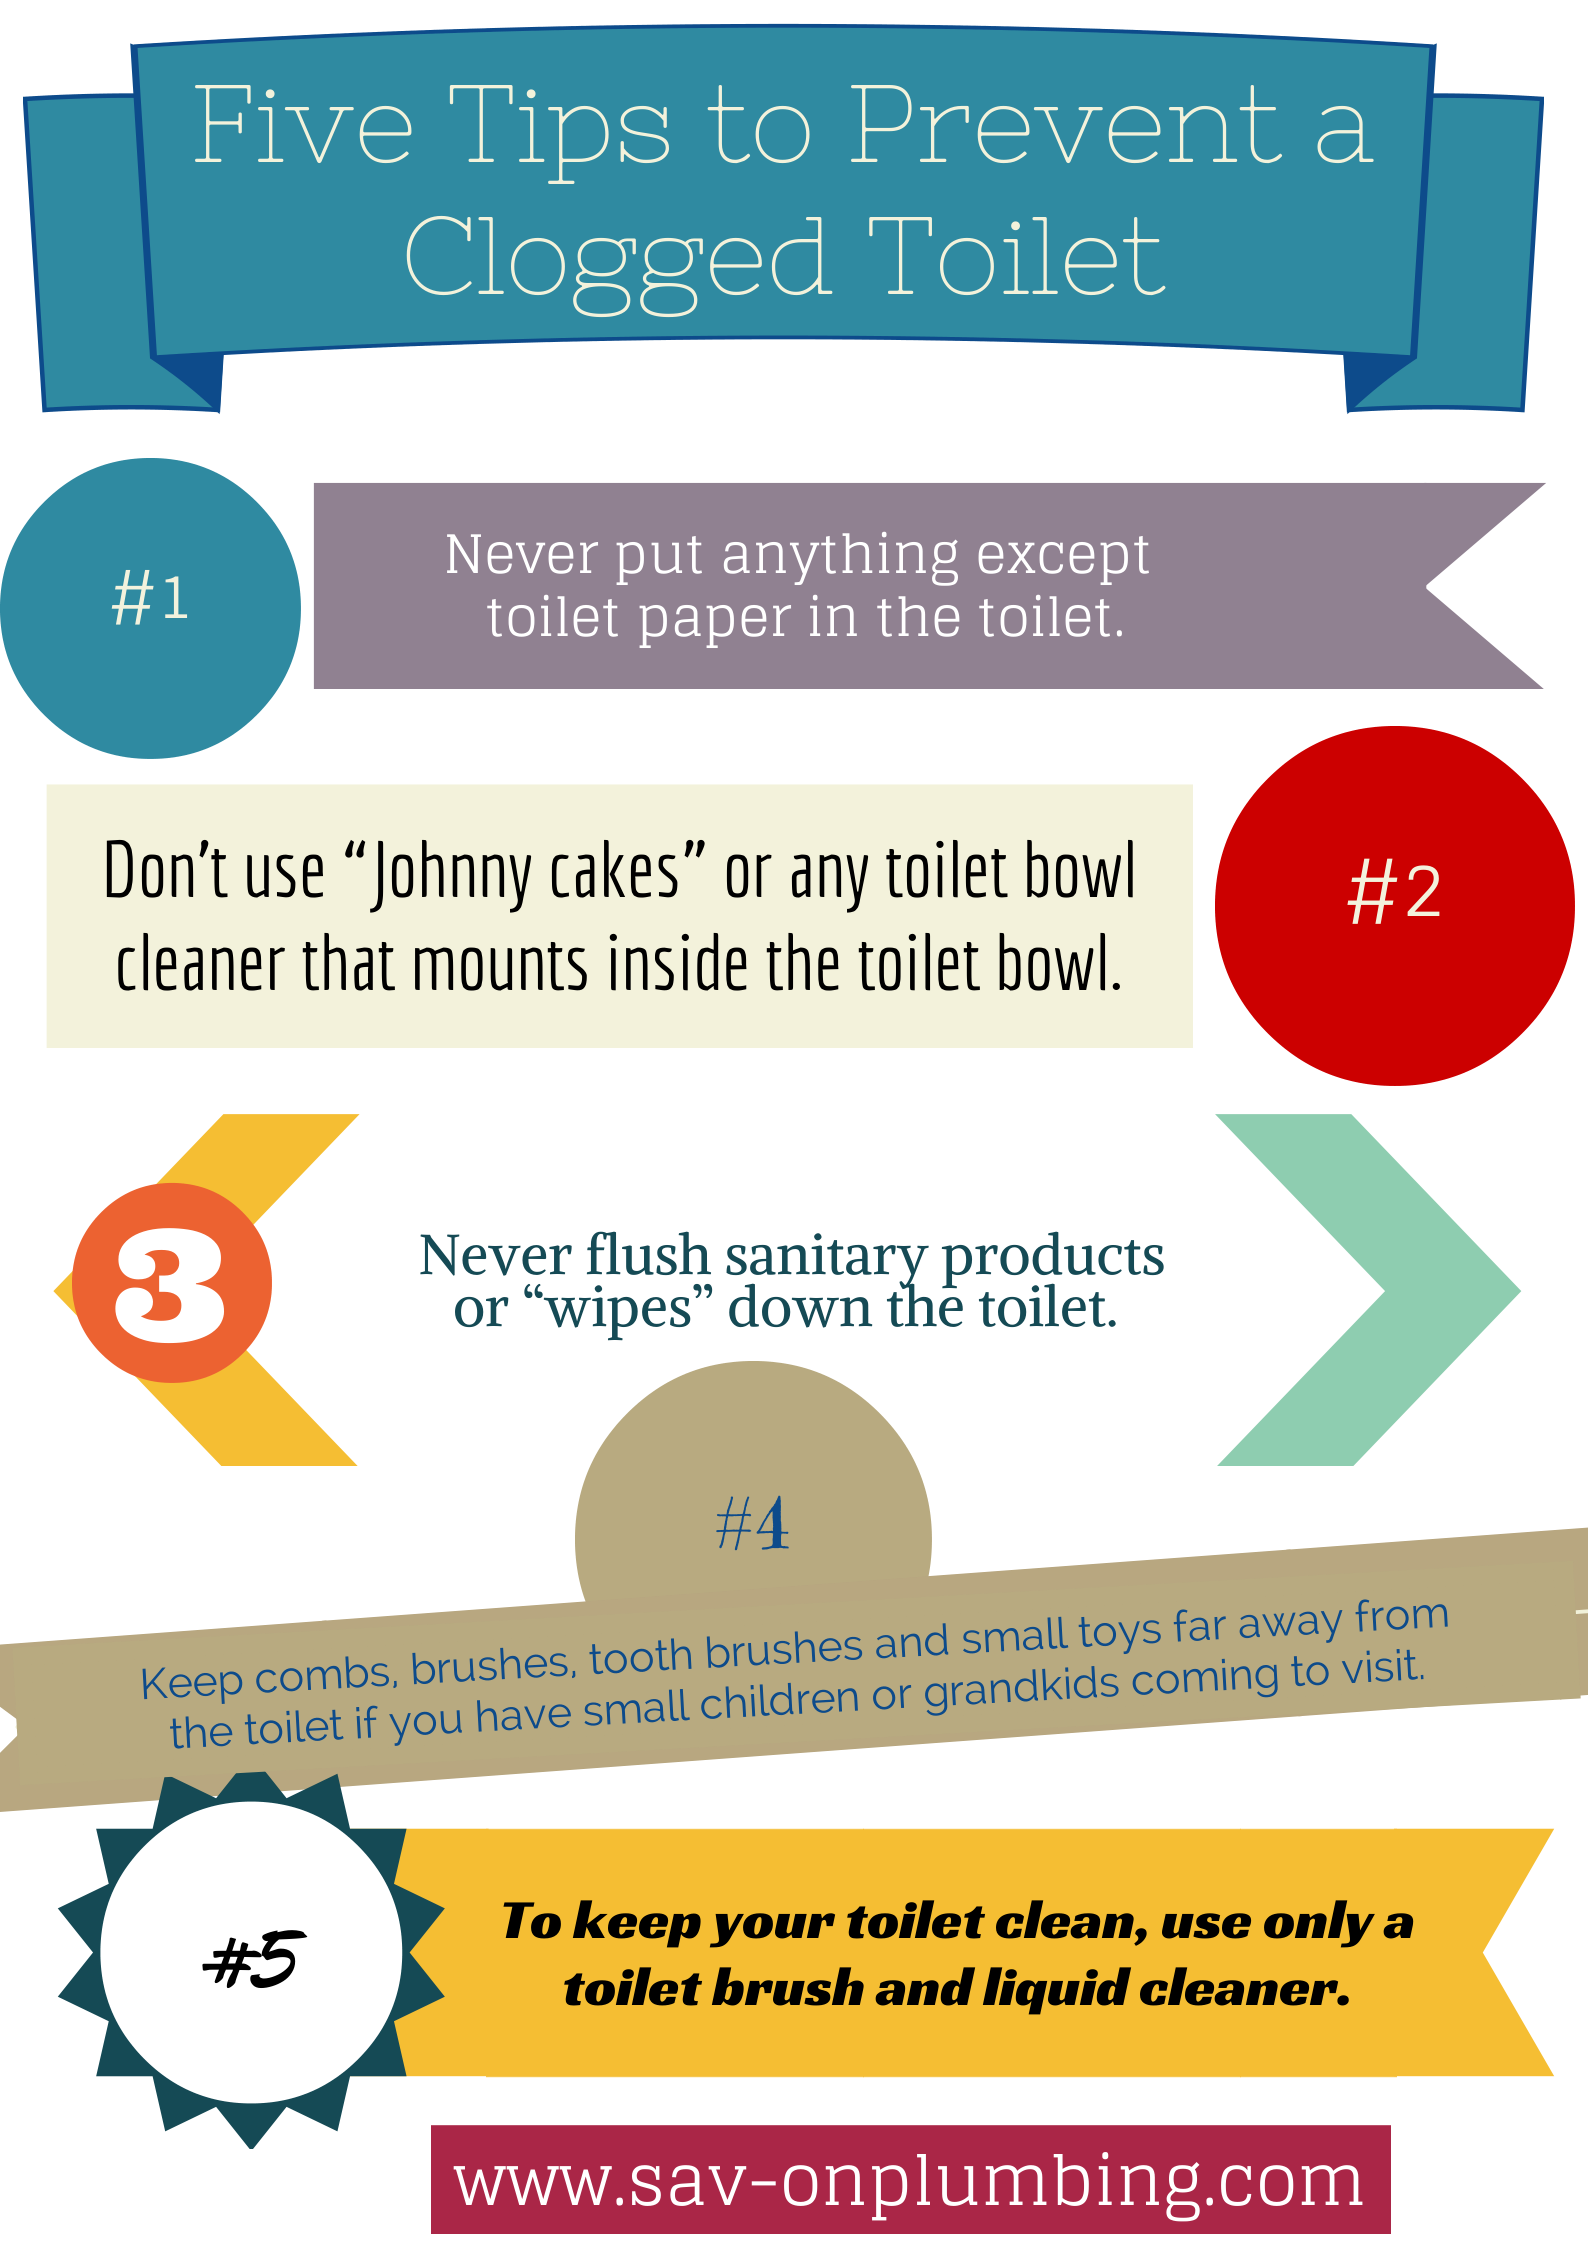 https://sav-onplumbing.com/wp-content/uploads/2014/03/Five-Tips-Prevent-Clogged-Toilet-1.png